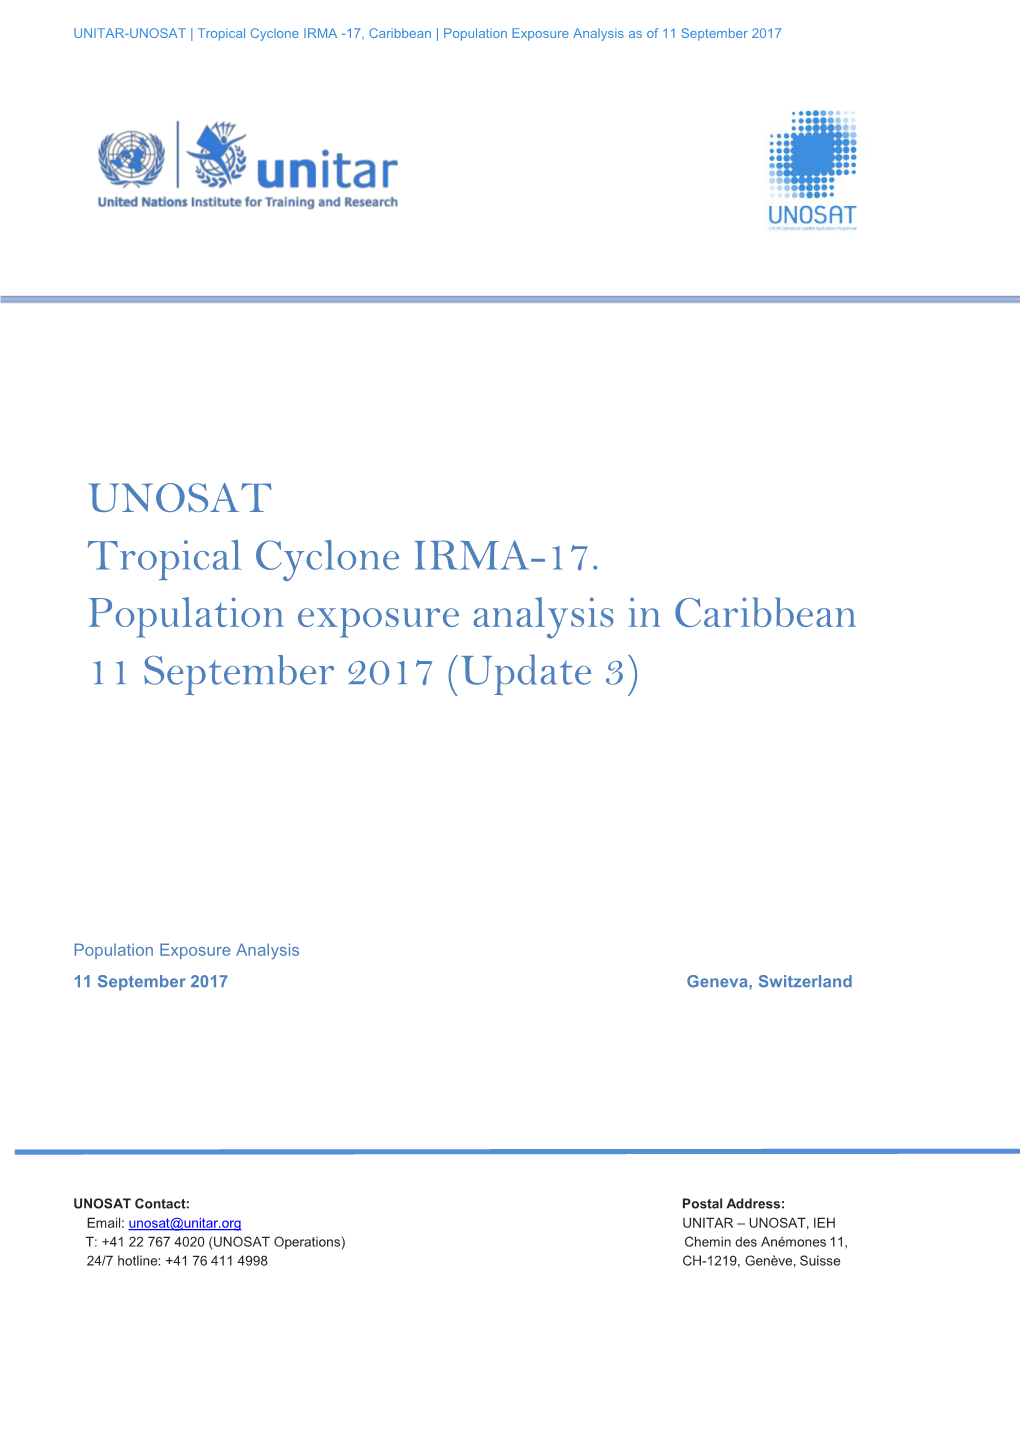 UNOSAT Tropical Cyclone IRMA-17. Population Exposure Analysis in Caribbean 11 September 2017 (Update 3)